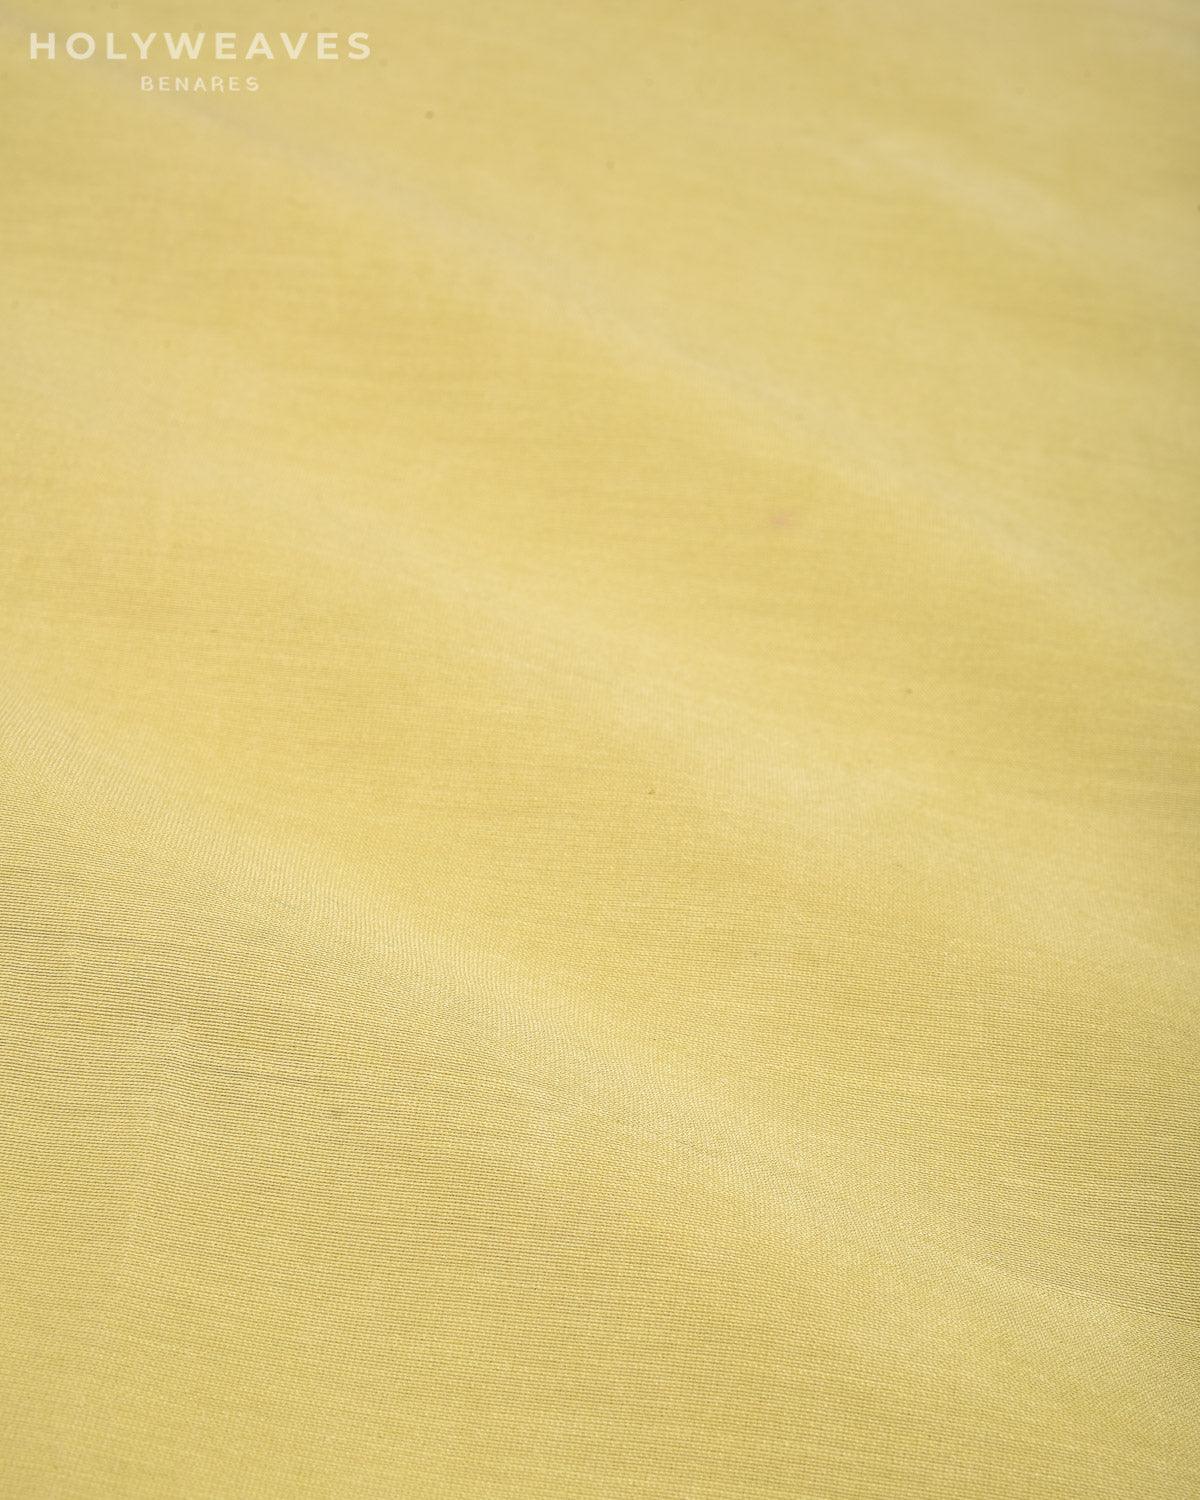 Artichoke Green Banarasi Pure Cotton Silk Fabric - By HolyWeaves, Benares